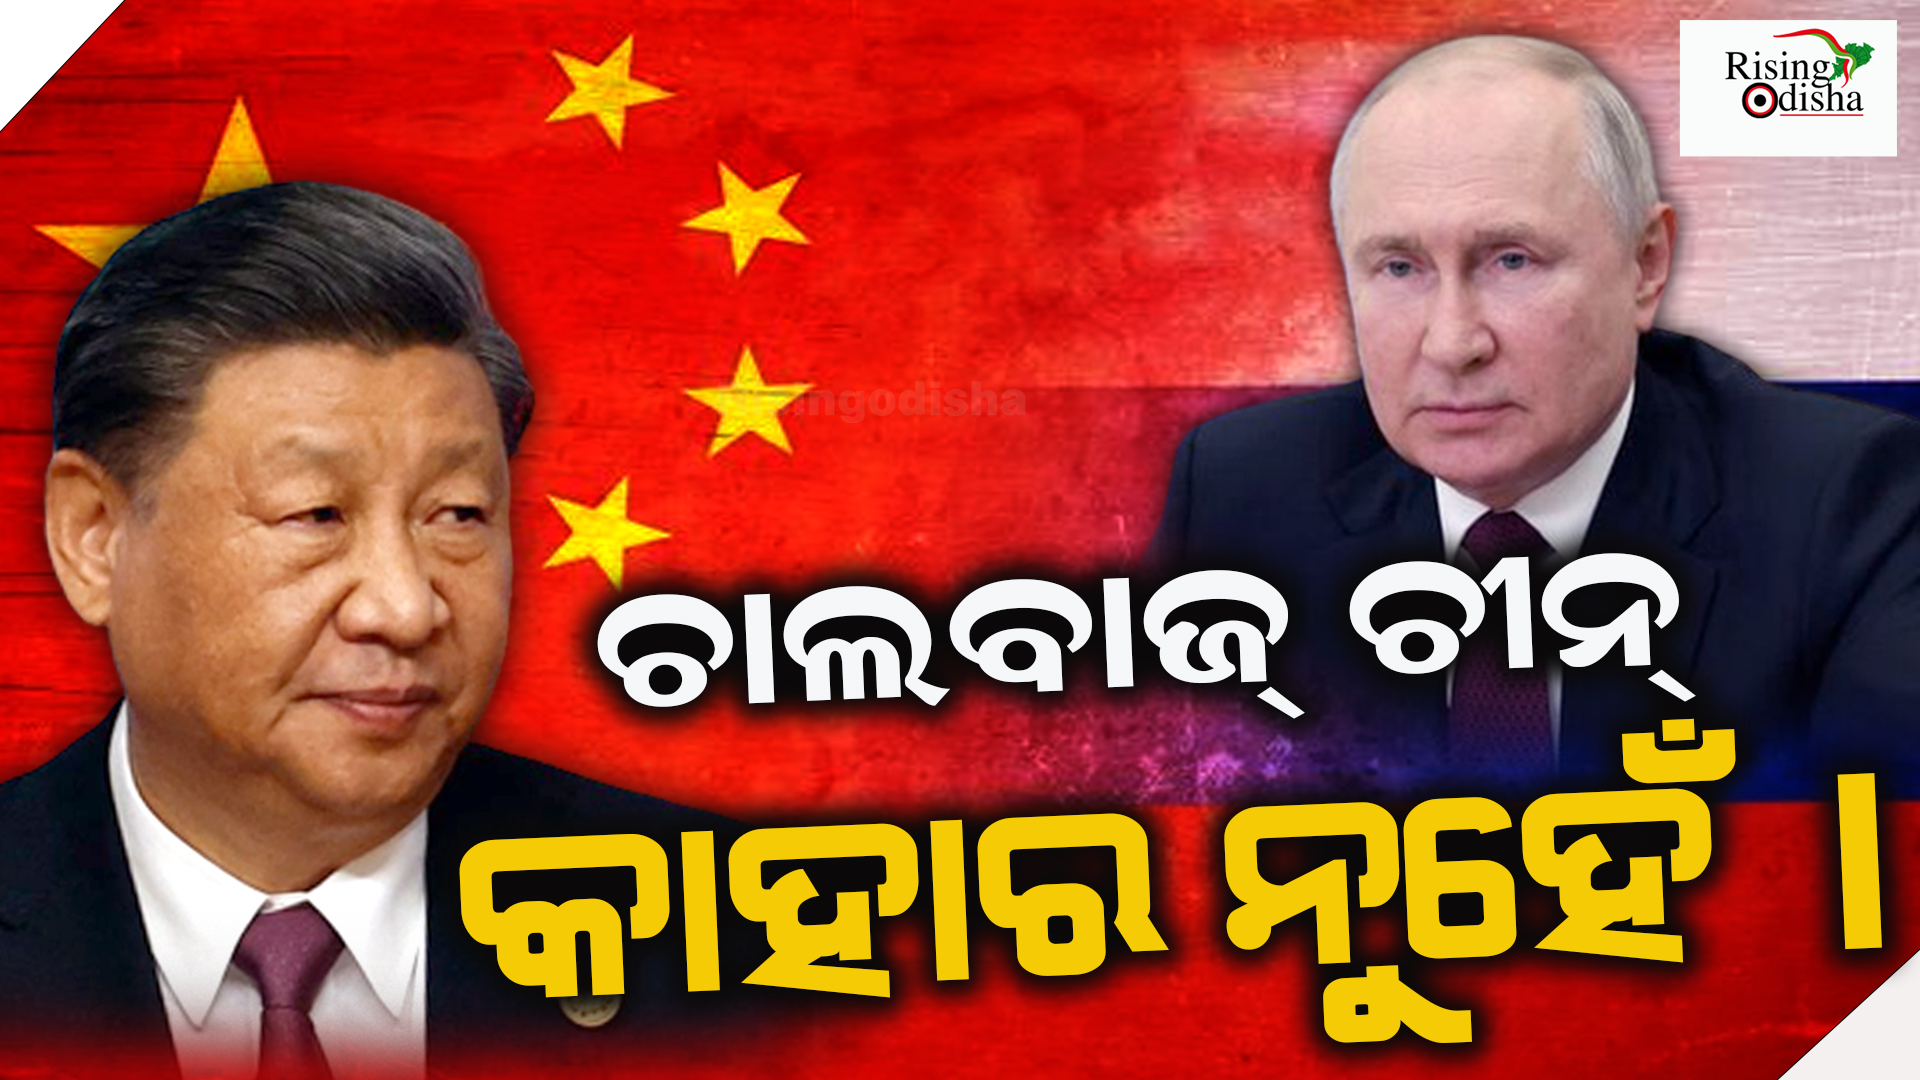 china russia news, china new map controversy, china vs russia war map, odia blog, rising odisha